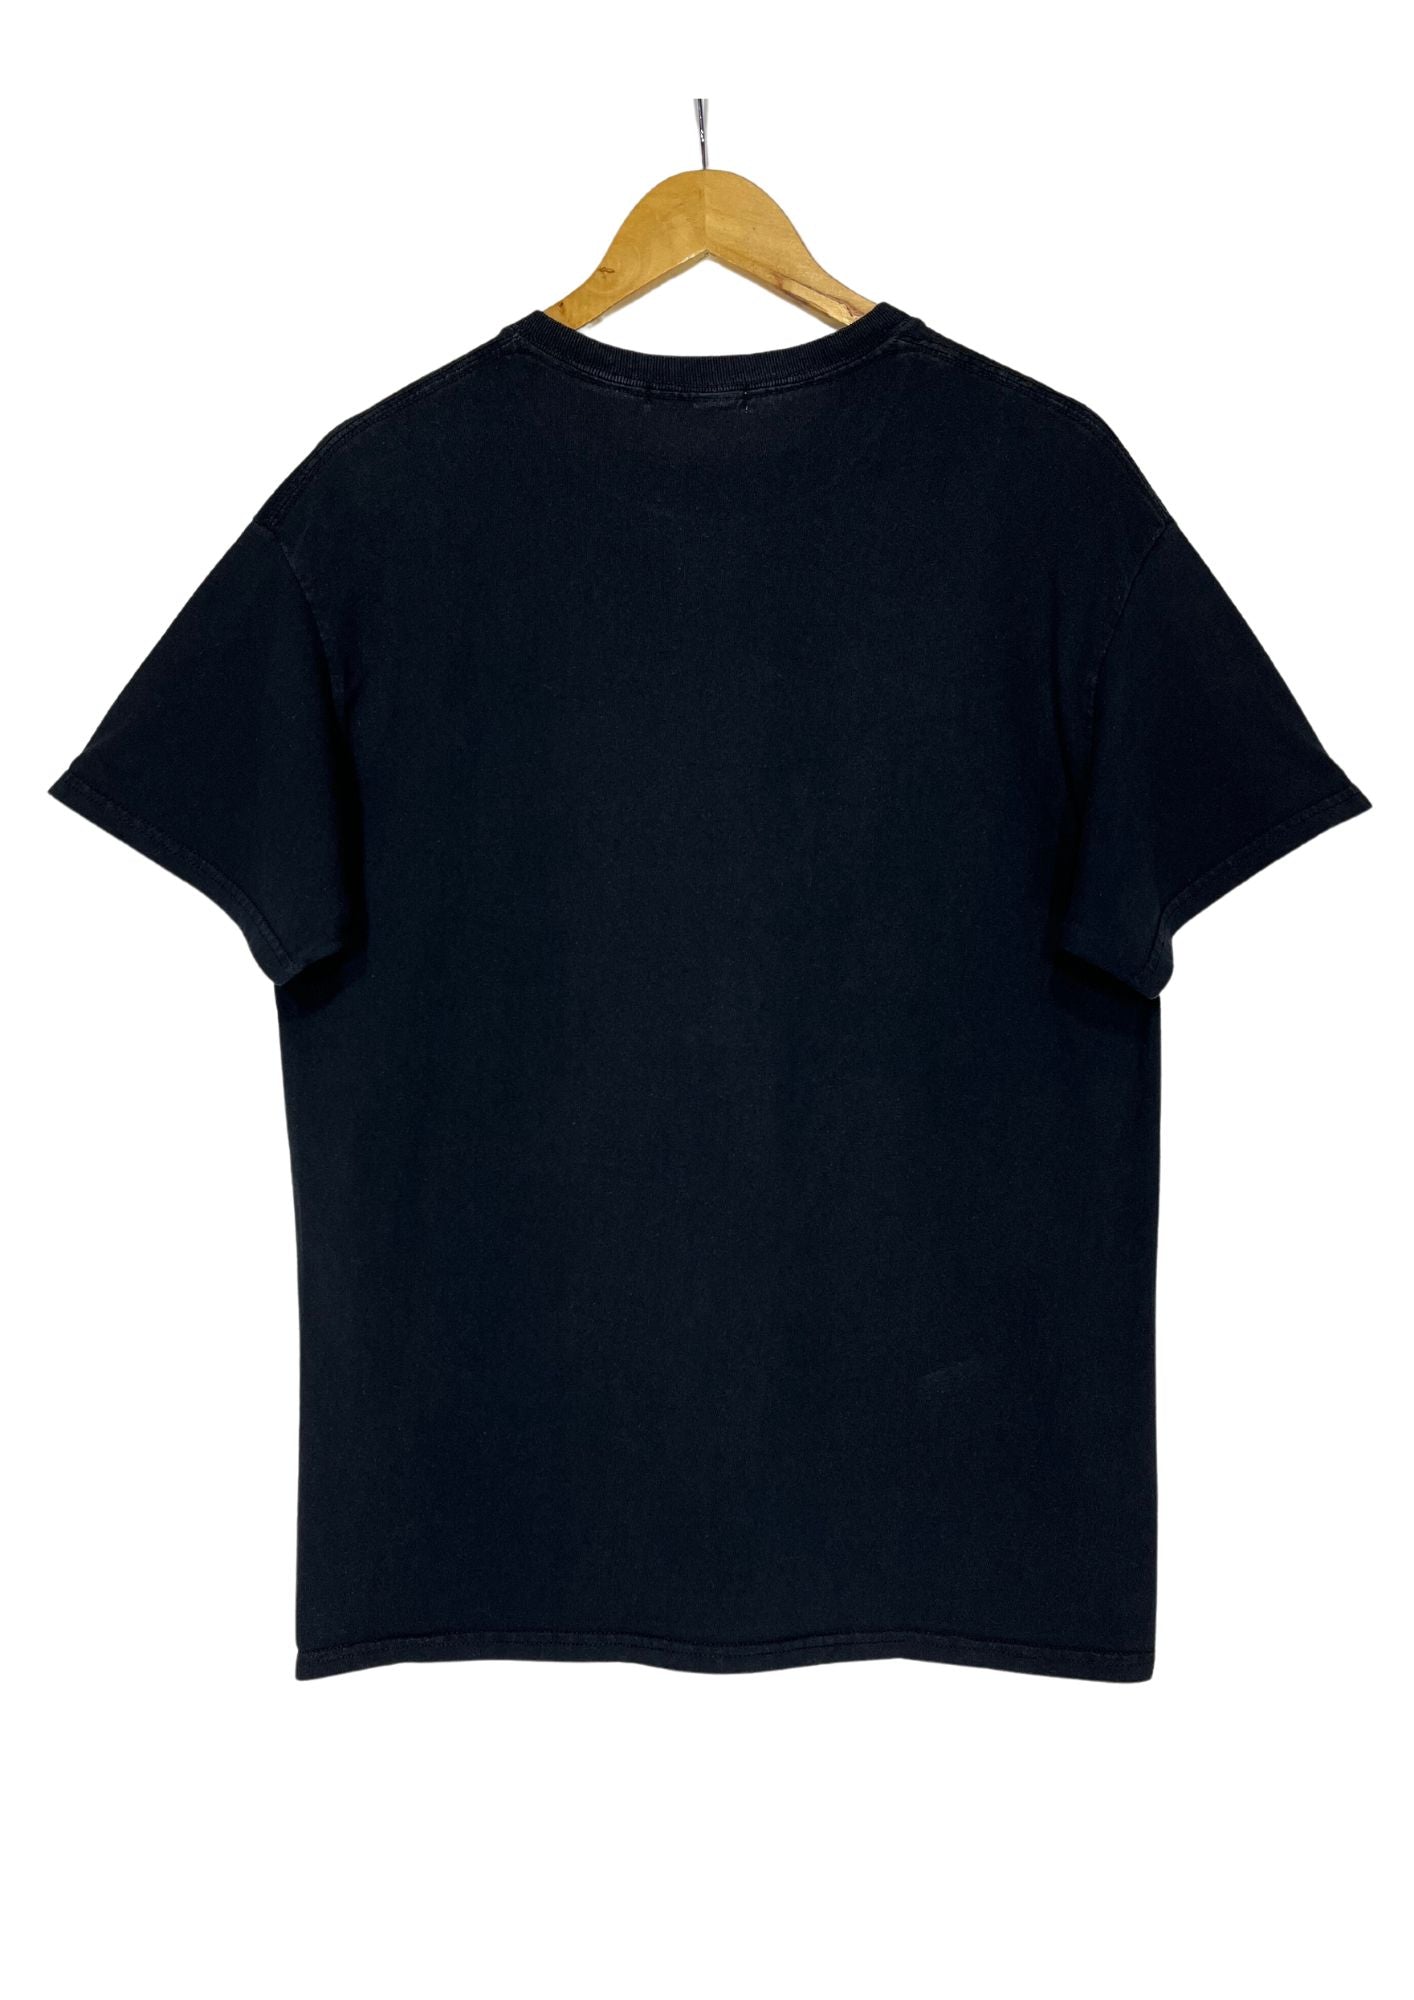 2020 Neon Genesis Evangelion x Flagstuff Rei T-shirt